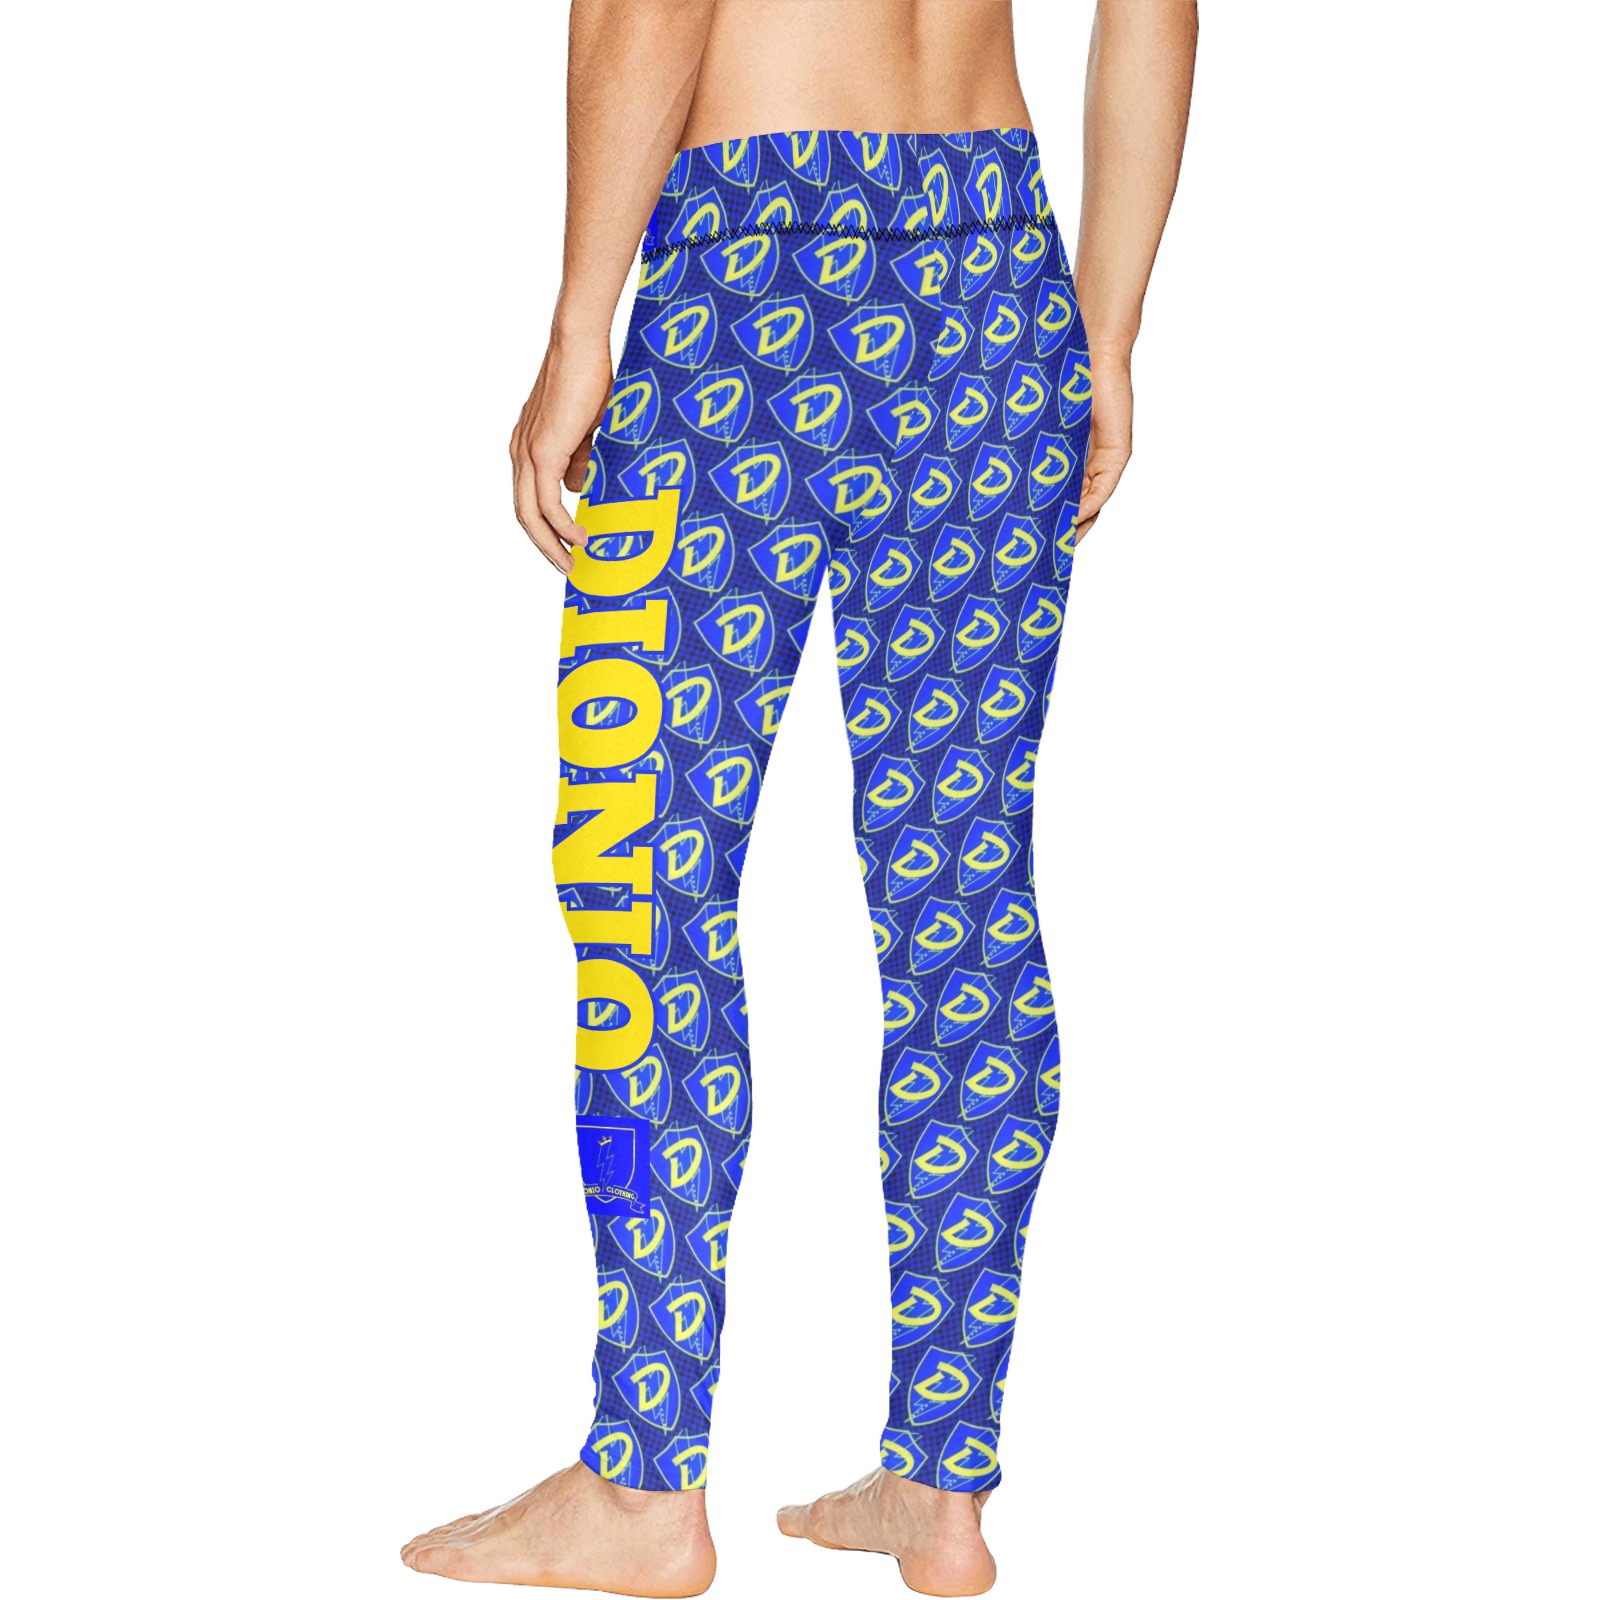 DIONIO Clothing - Men's D Shield Repeat Workout/Exercise Pants(Blue,Black & Yellow) Men's All Over Print Leggings (Model L38)